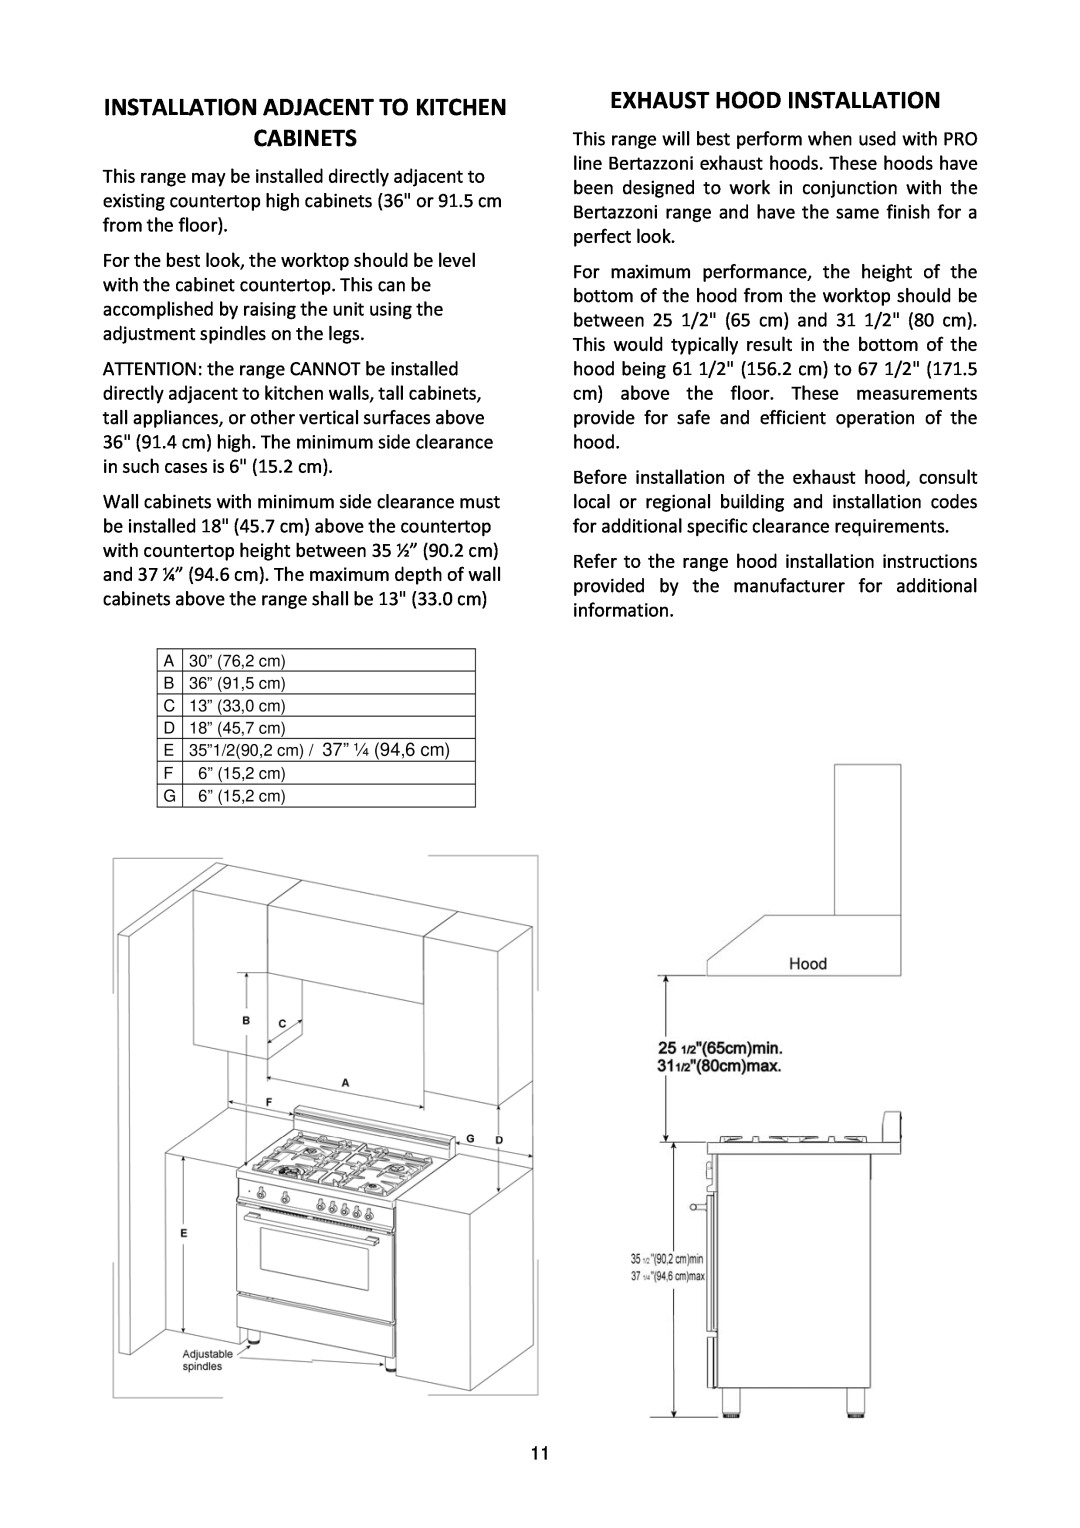 Bertazzoni MAS30 4 GAS XE, MAS30 4 GAS XT manual Installation Adjacent To Kitchen Cabinets, Exhaust Hood Installation 